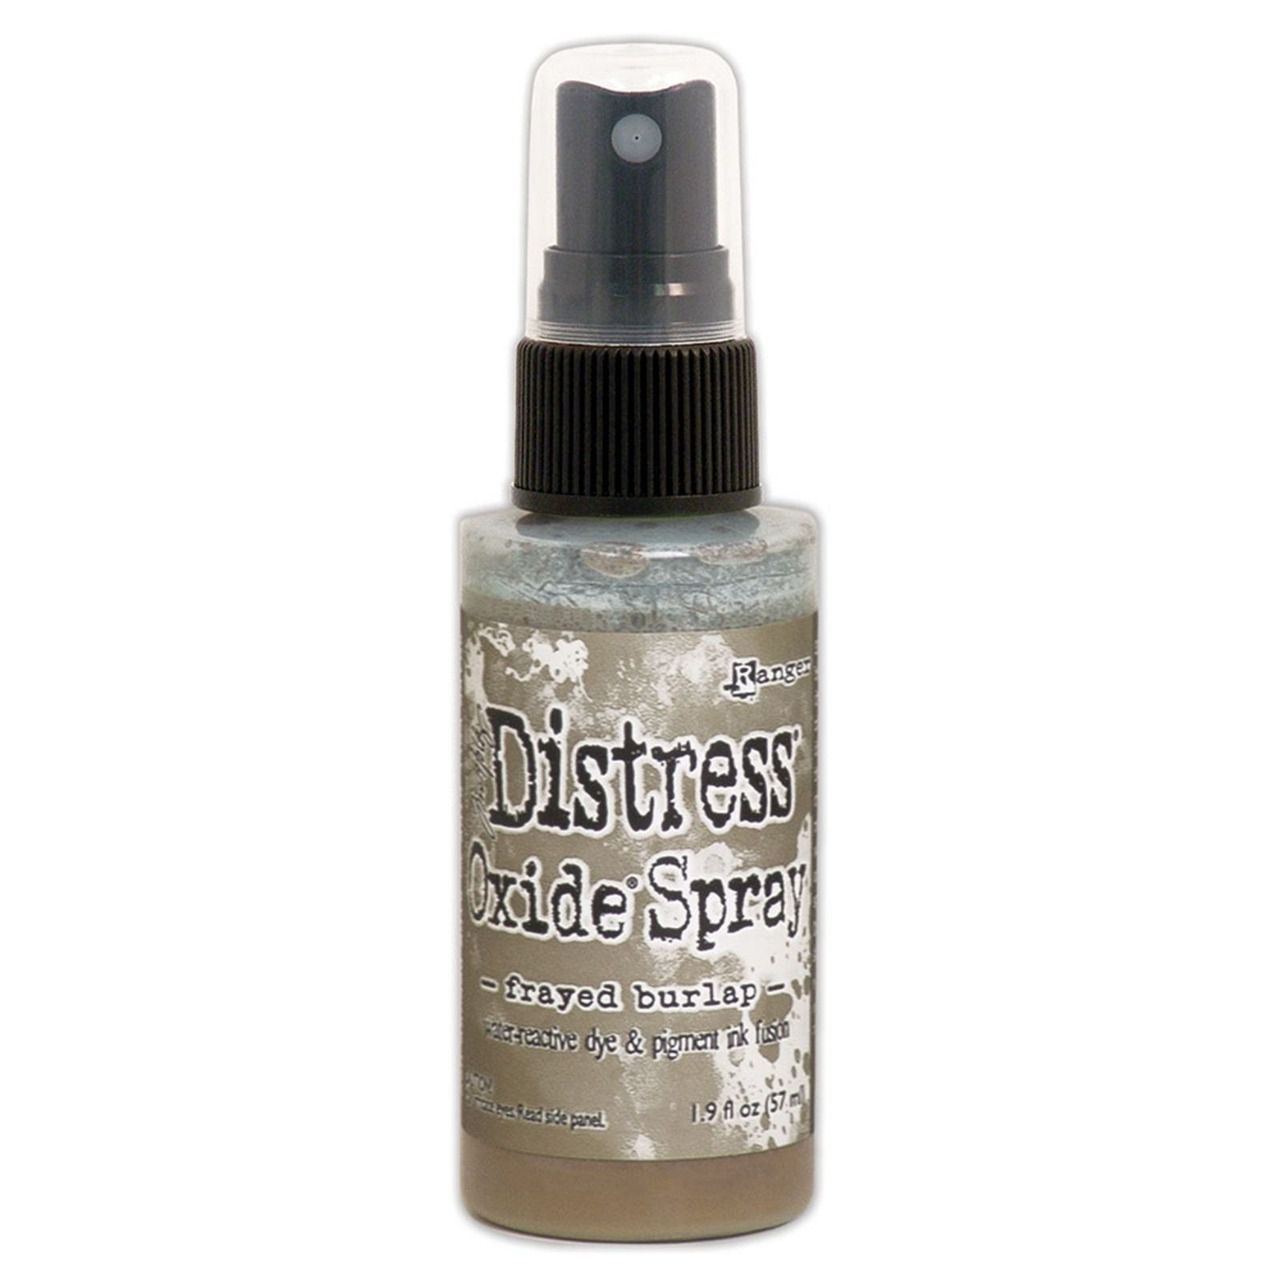 Distress spray oxide : Frayed burlap